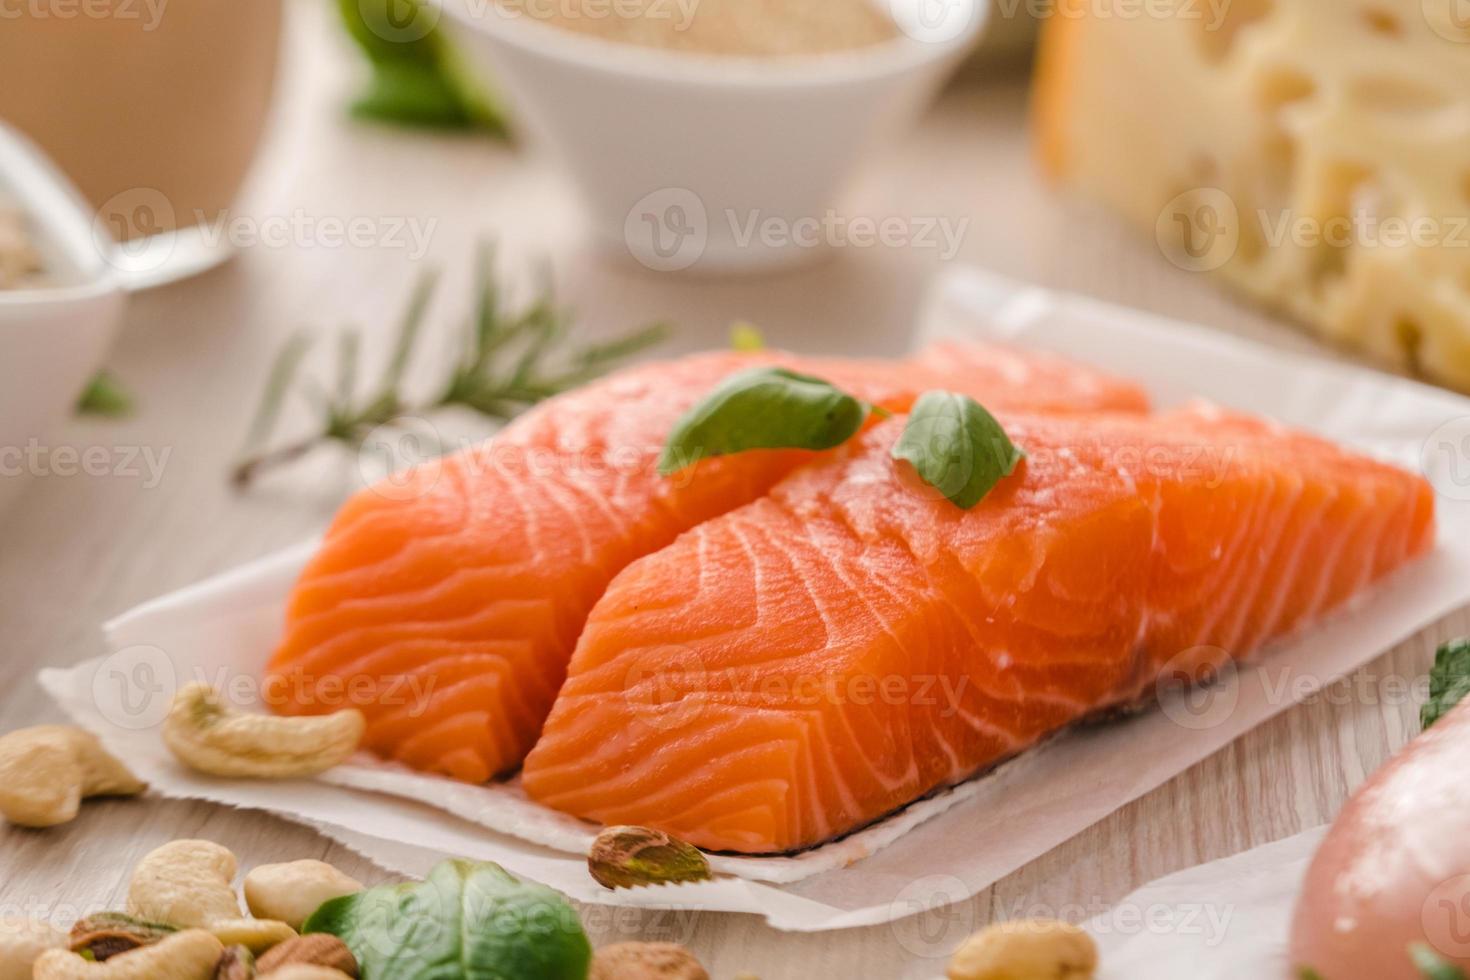 filete de salmón crudo. concepto de comida sana y proteica foto